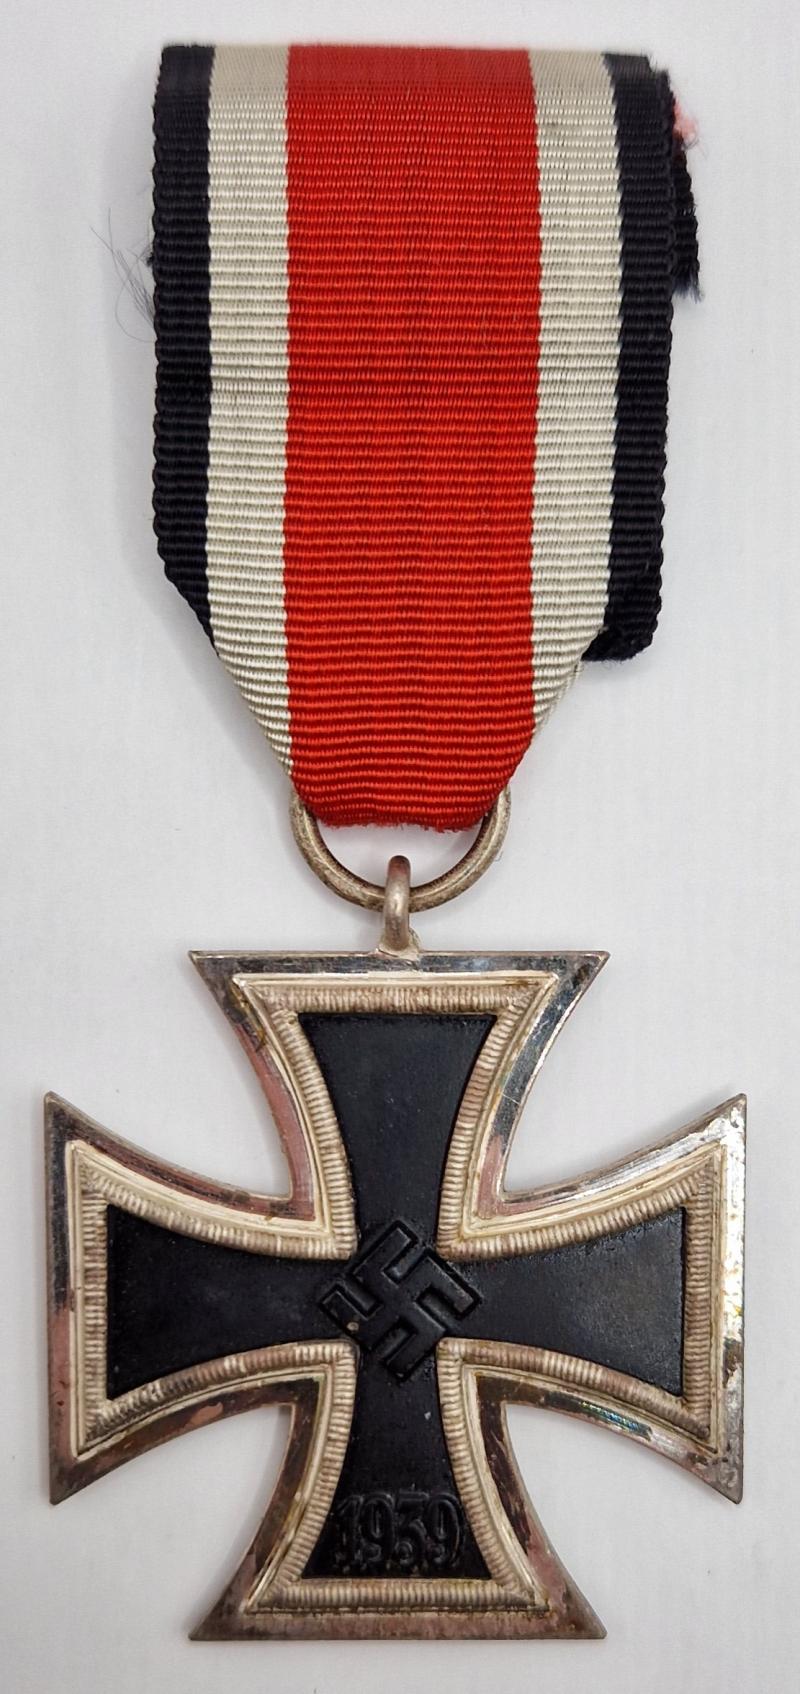 1939 Iron Cross Second Class by Wächtler und Lange mm100